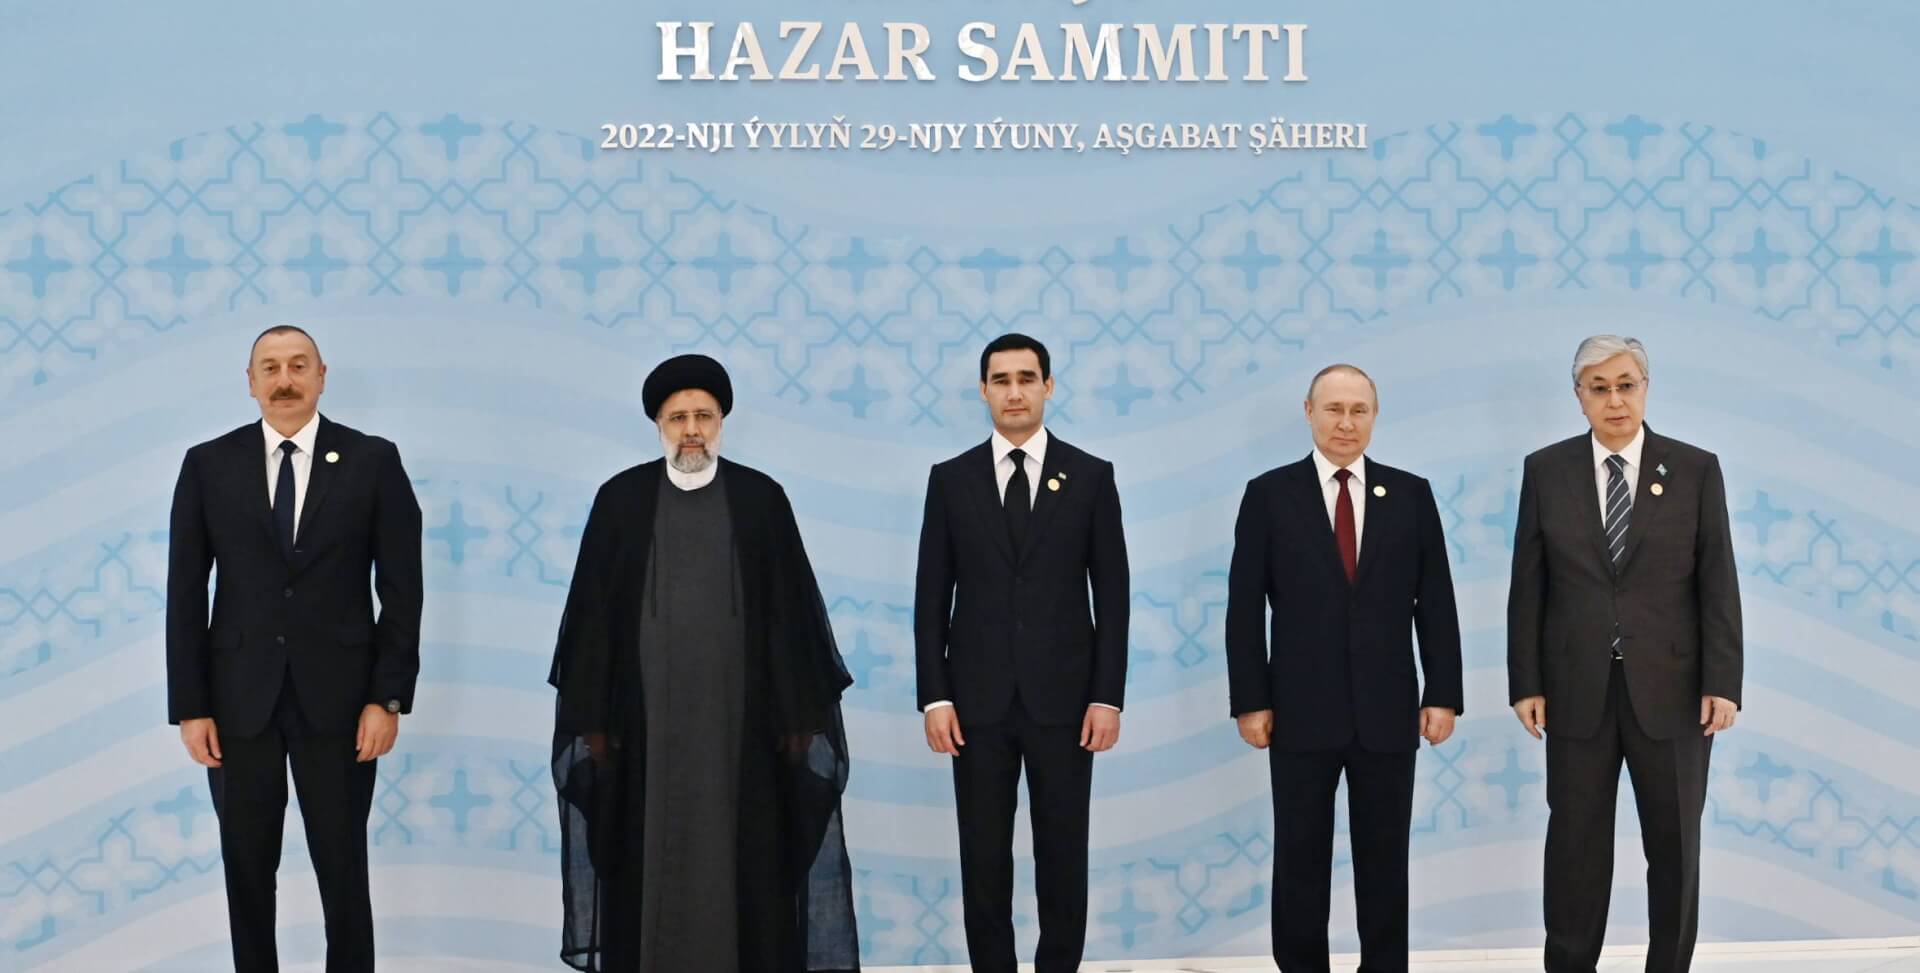 SUMMARY: Sixth Caspian Summit